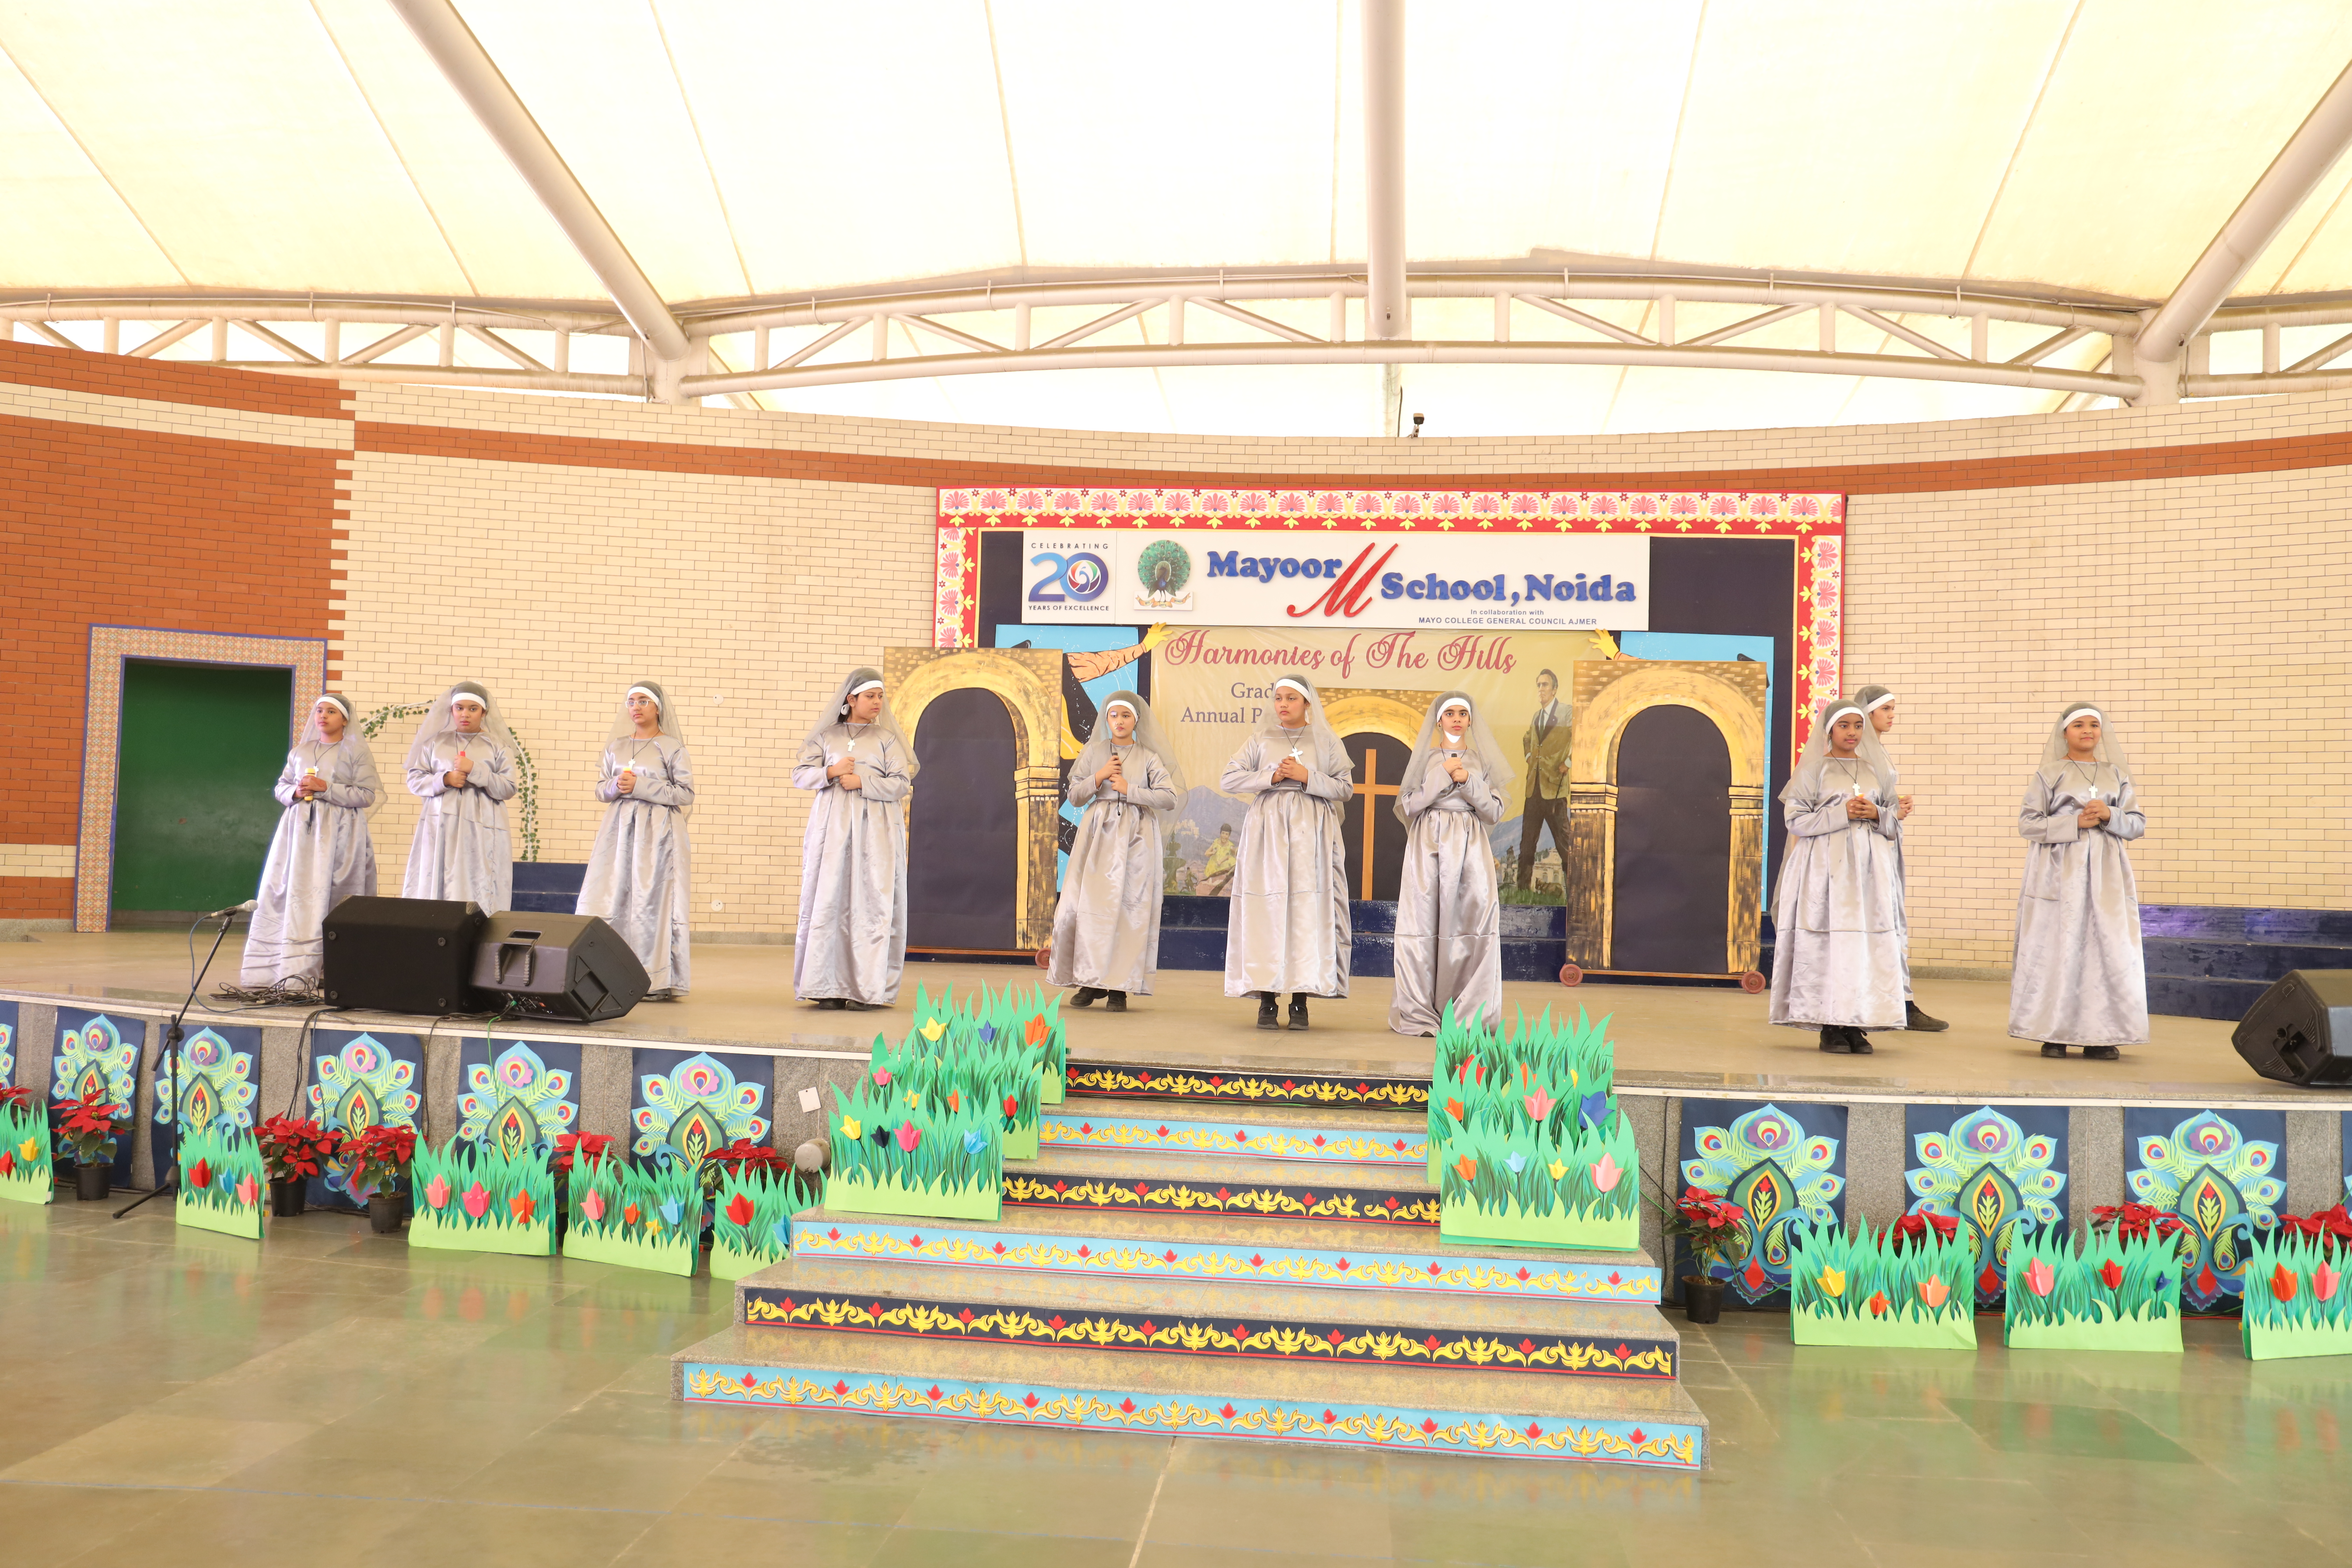 Mayoor organizses Harmonies of the Hills